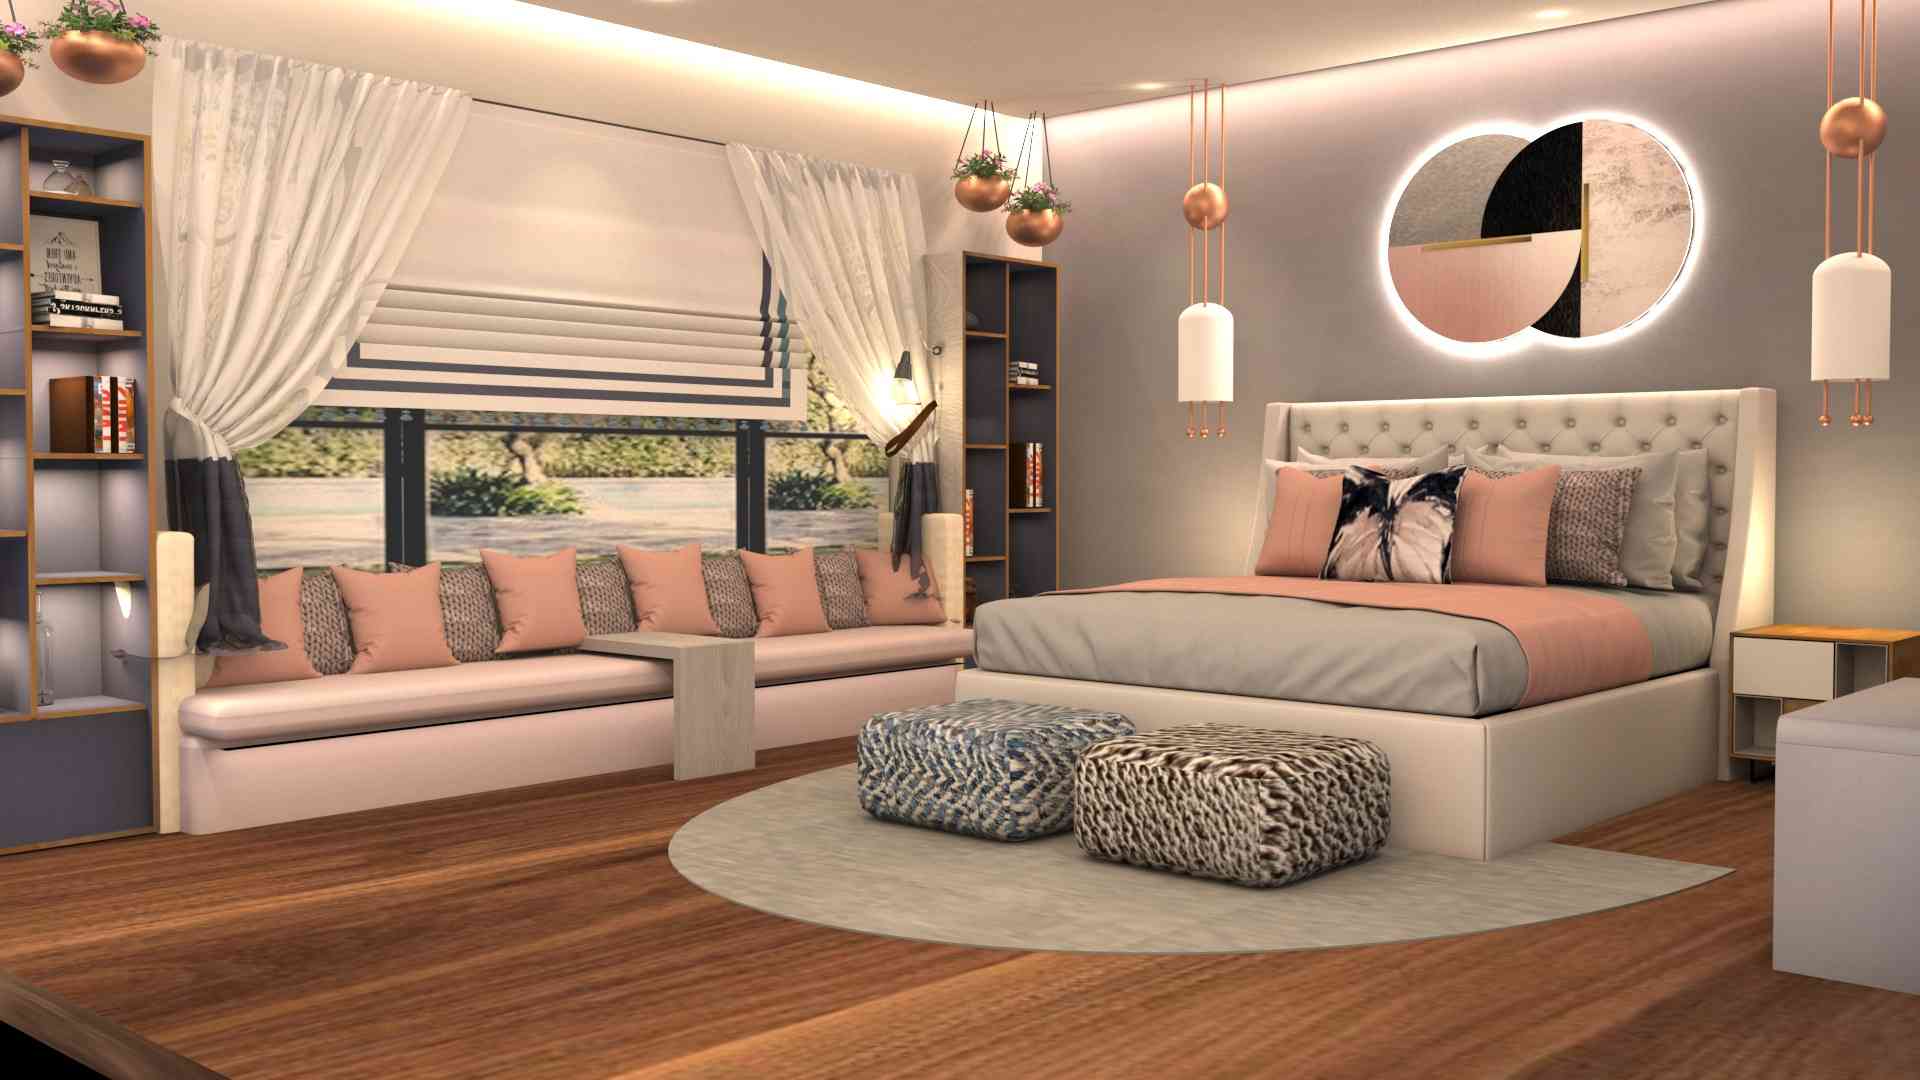 Transitional Master Bedroom Design With Pendant Lights